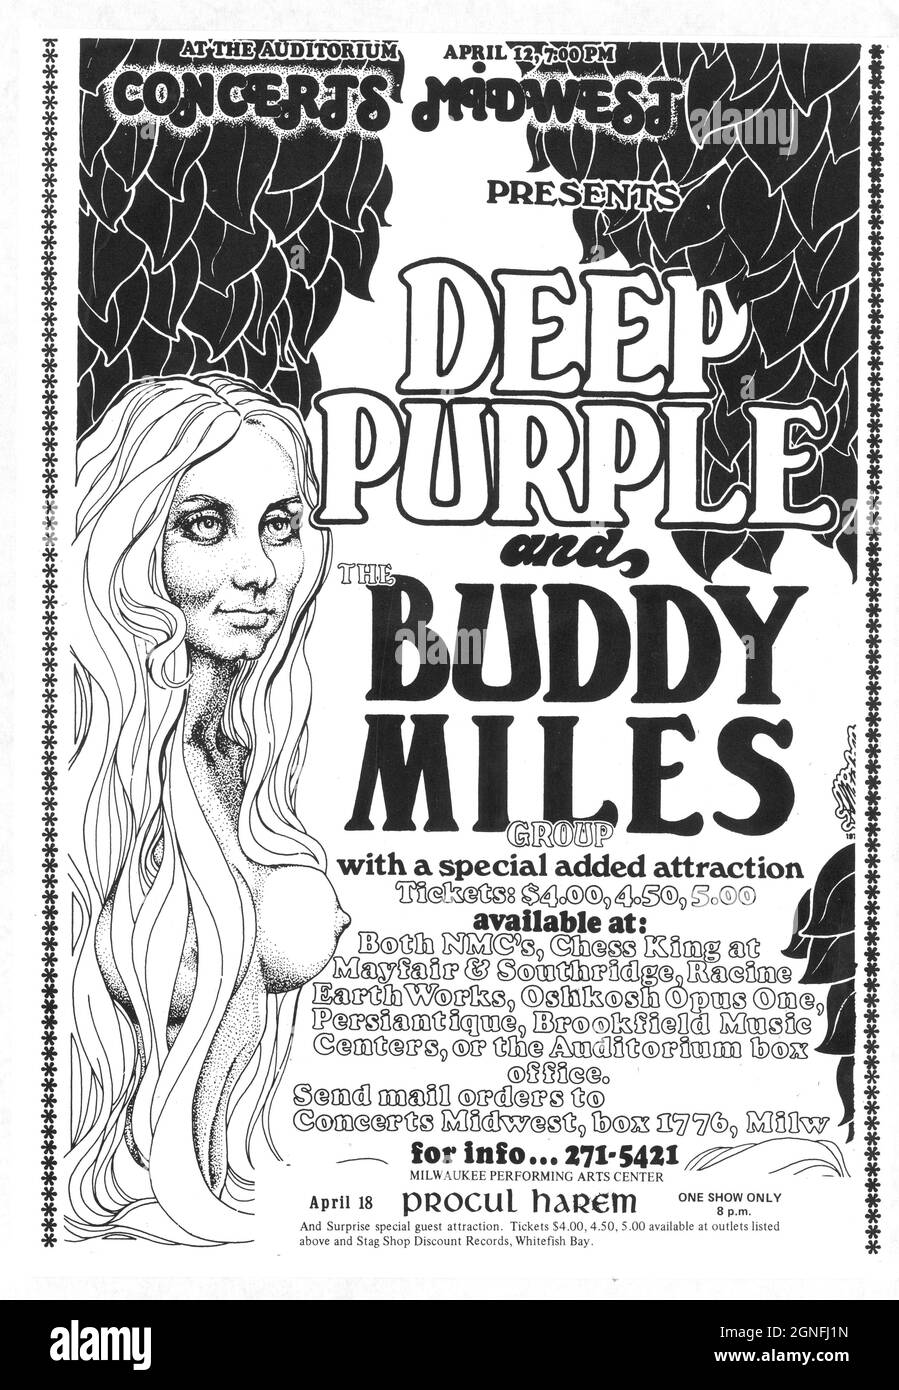 Deep Purple and Buddy Miles, Milwaukee Arts Center, April 12. 1972 Zeitungsannonce. Stockfoto